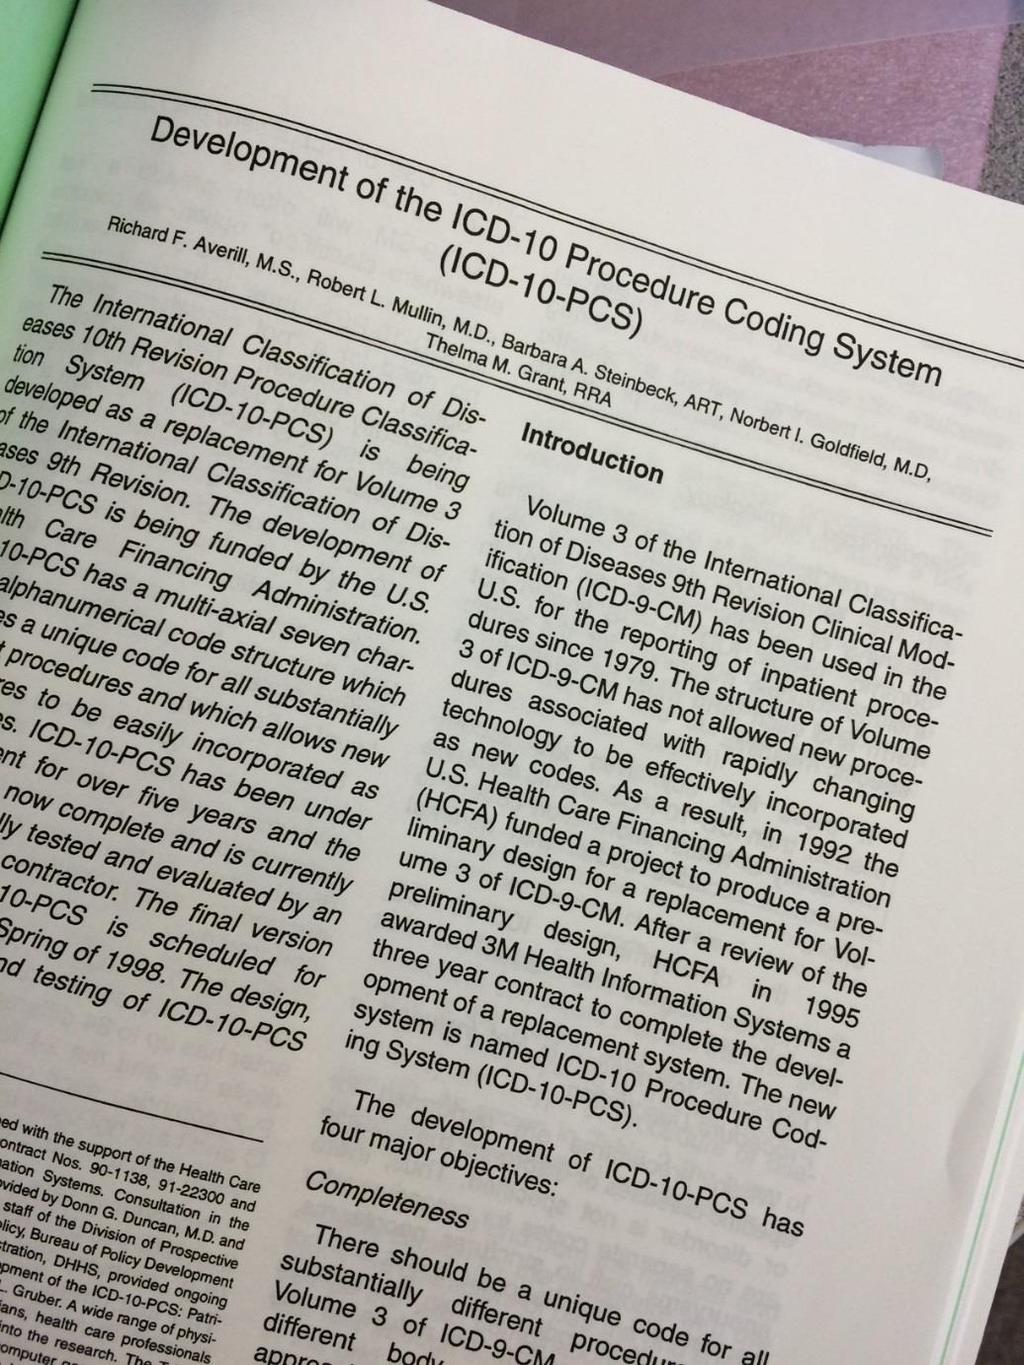 11/97 CPT Symposium 3M HIS staff outline ICD-10-PCS